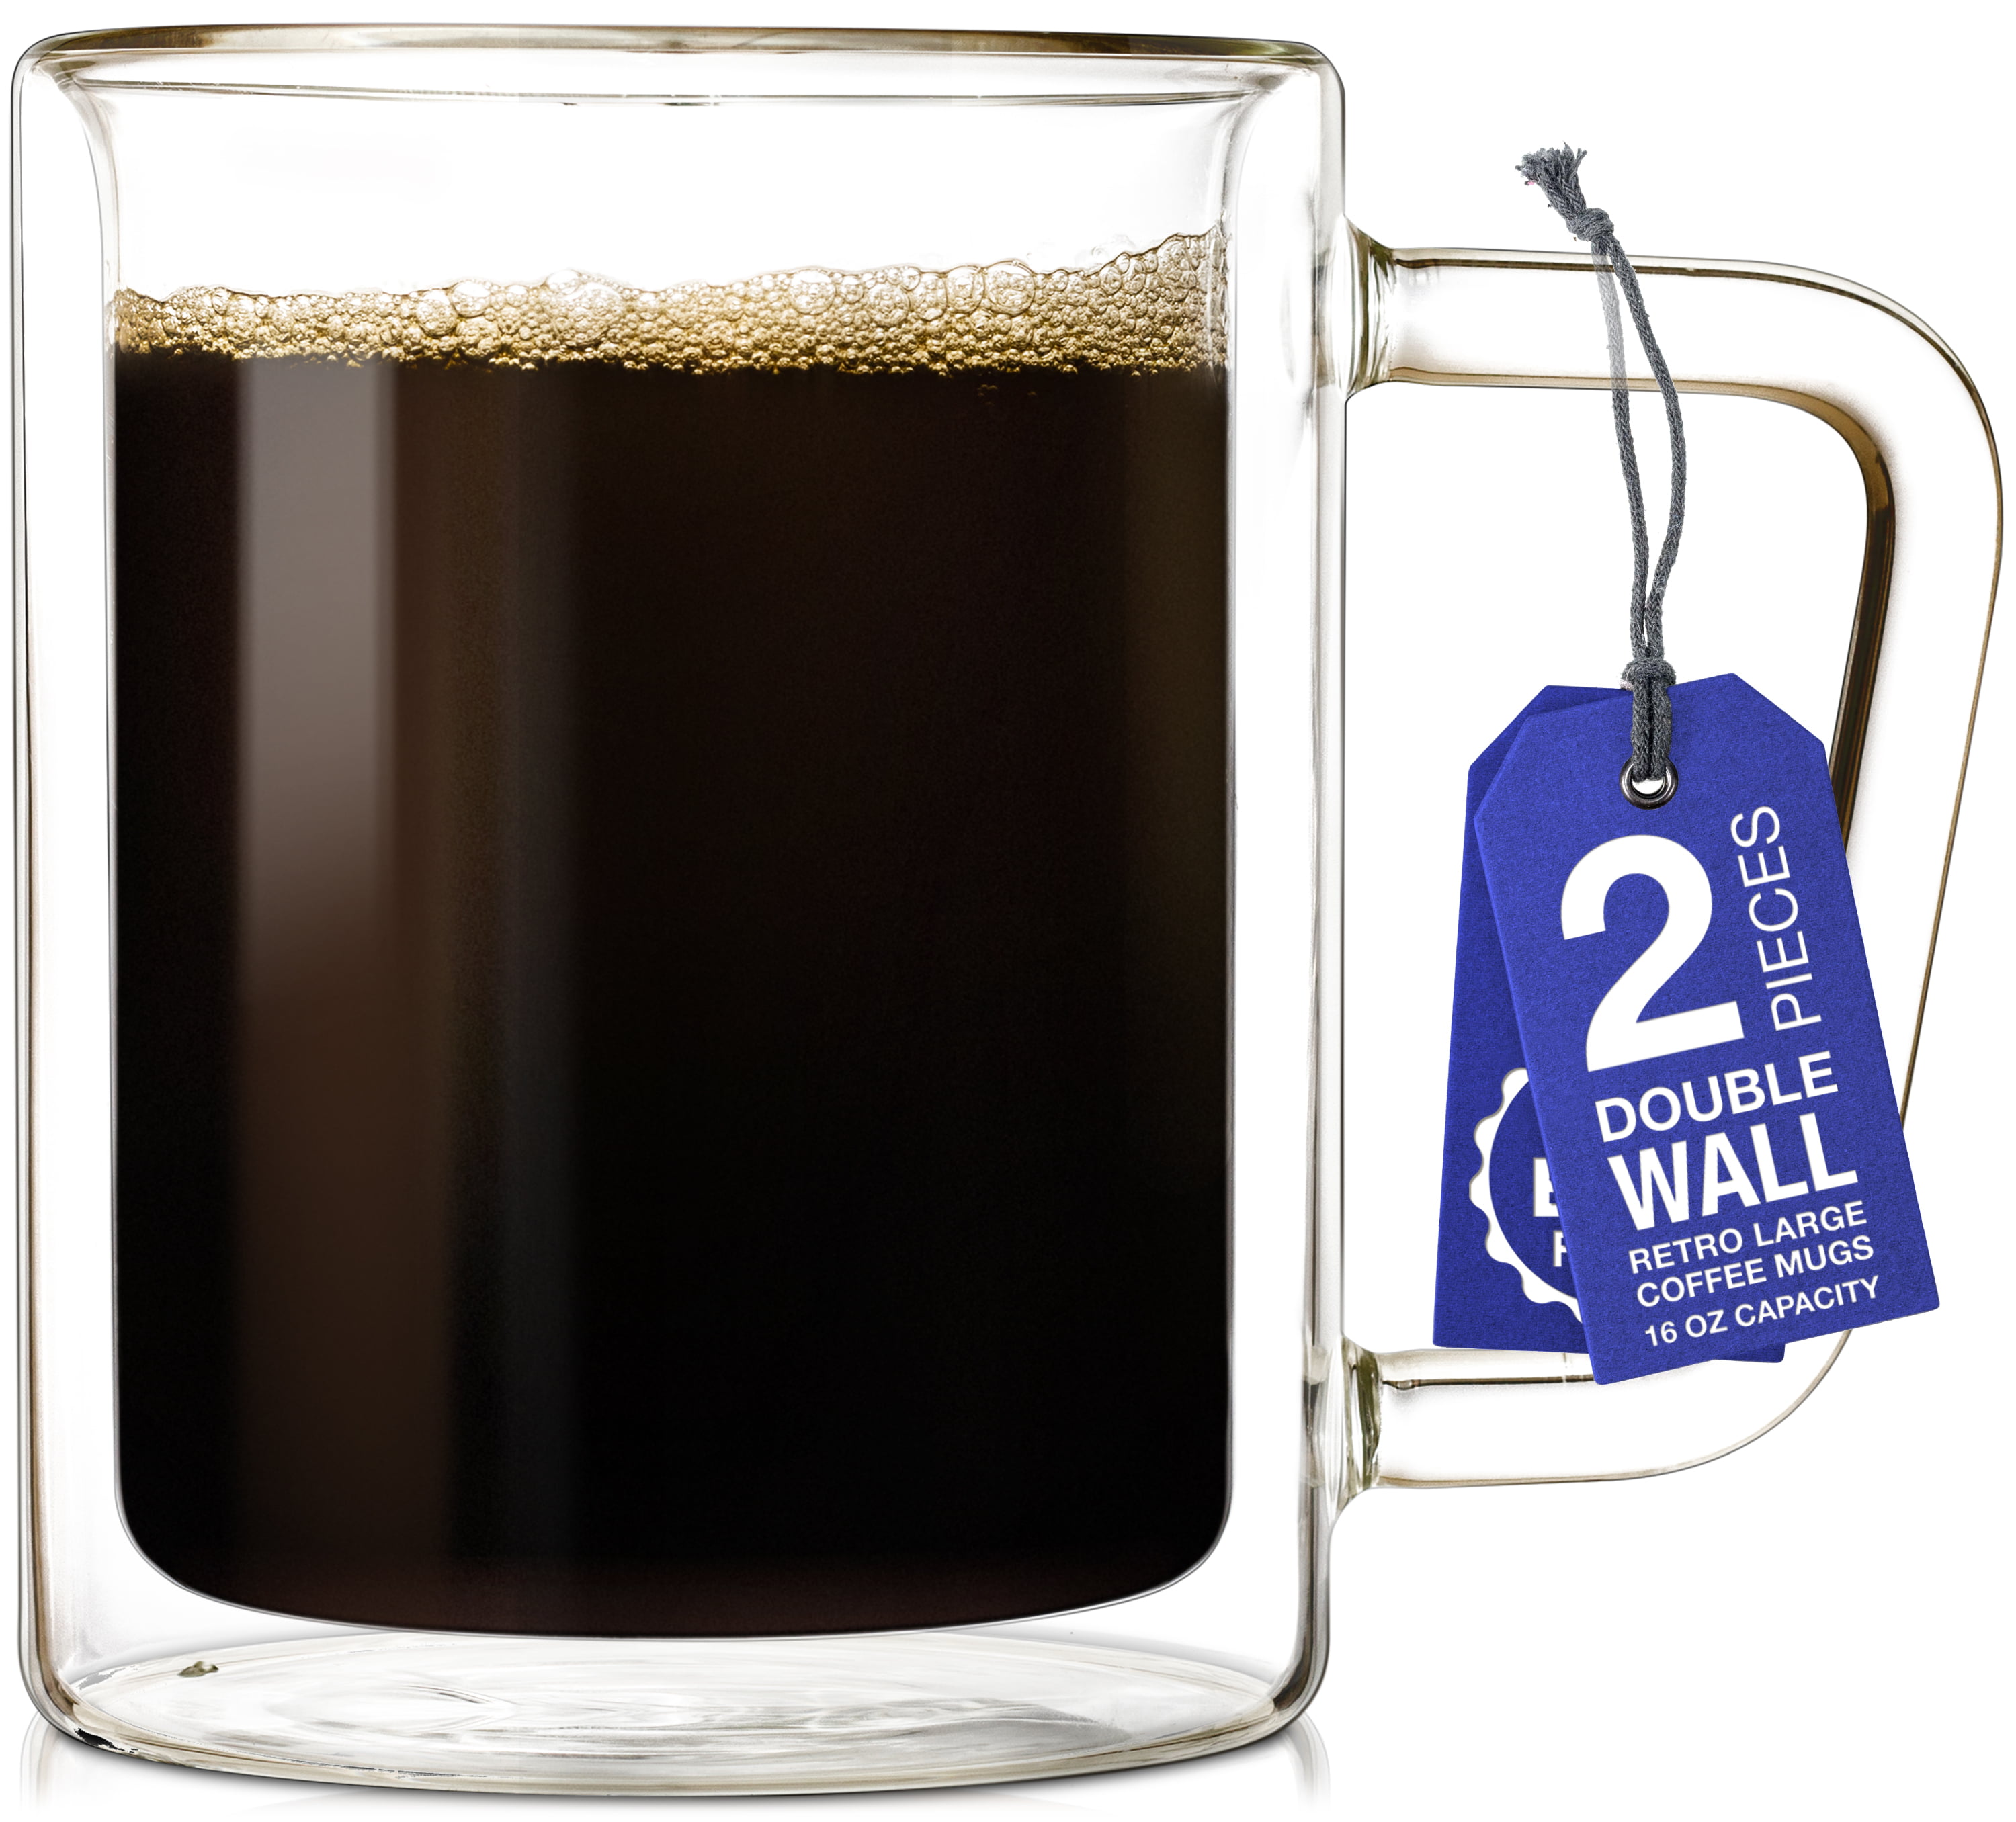 Eparé Retro Large Coffee Mug Set 16 Oz Insulated Mugs Double Walled Glass Coffee Mugs